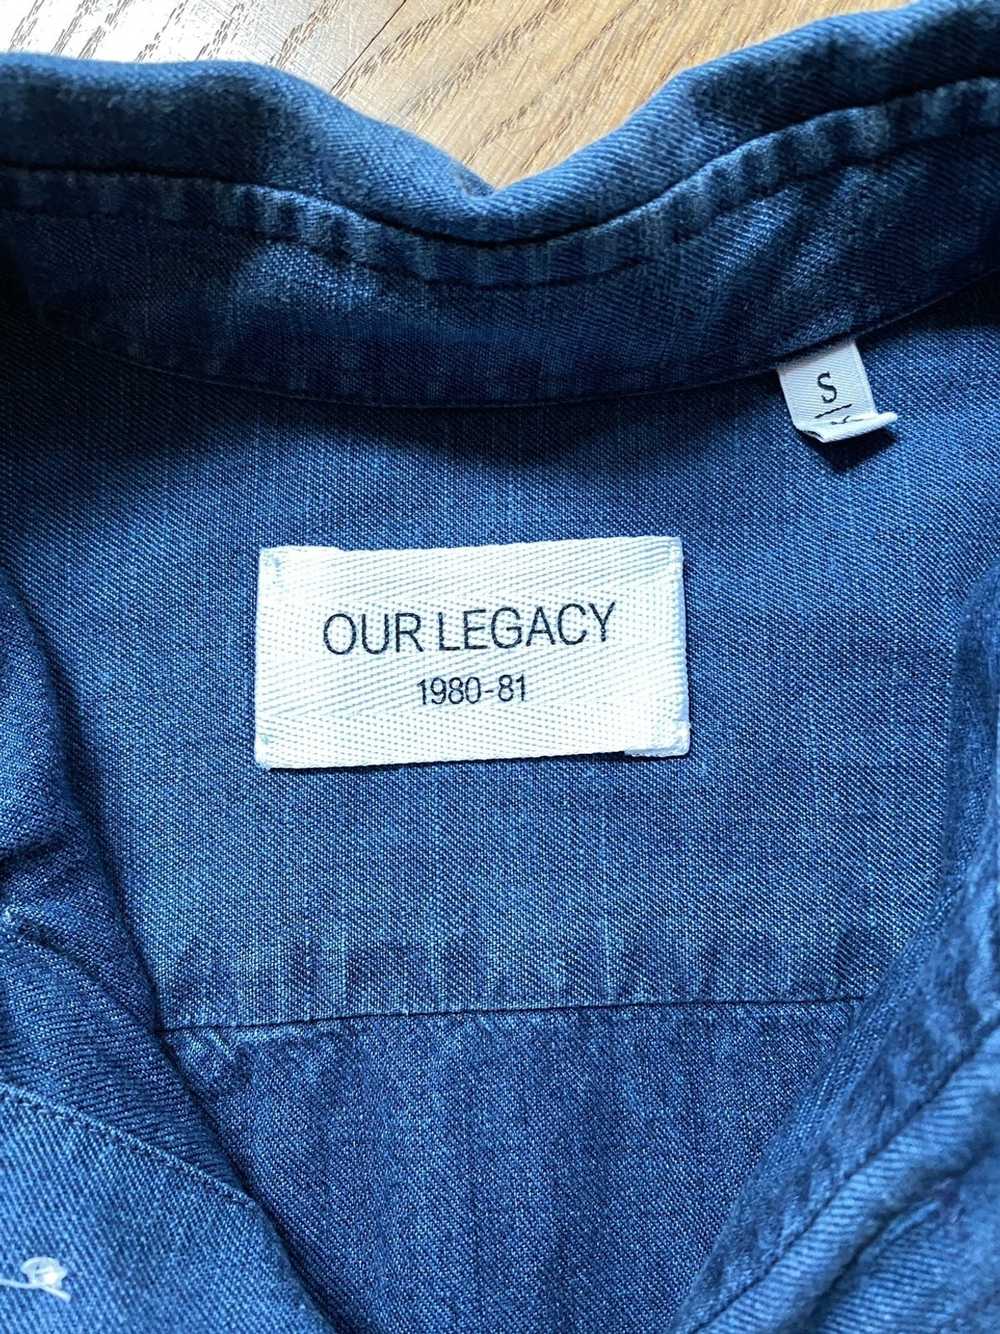 Our Legacy Indigo blue embroided shirt - image 4